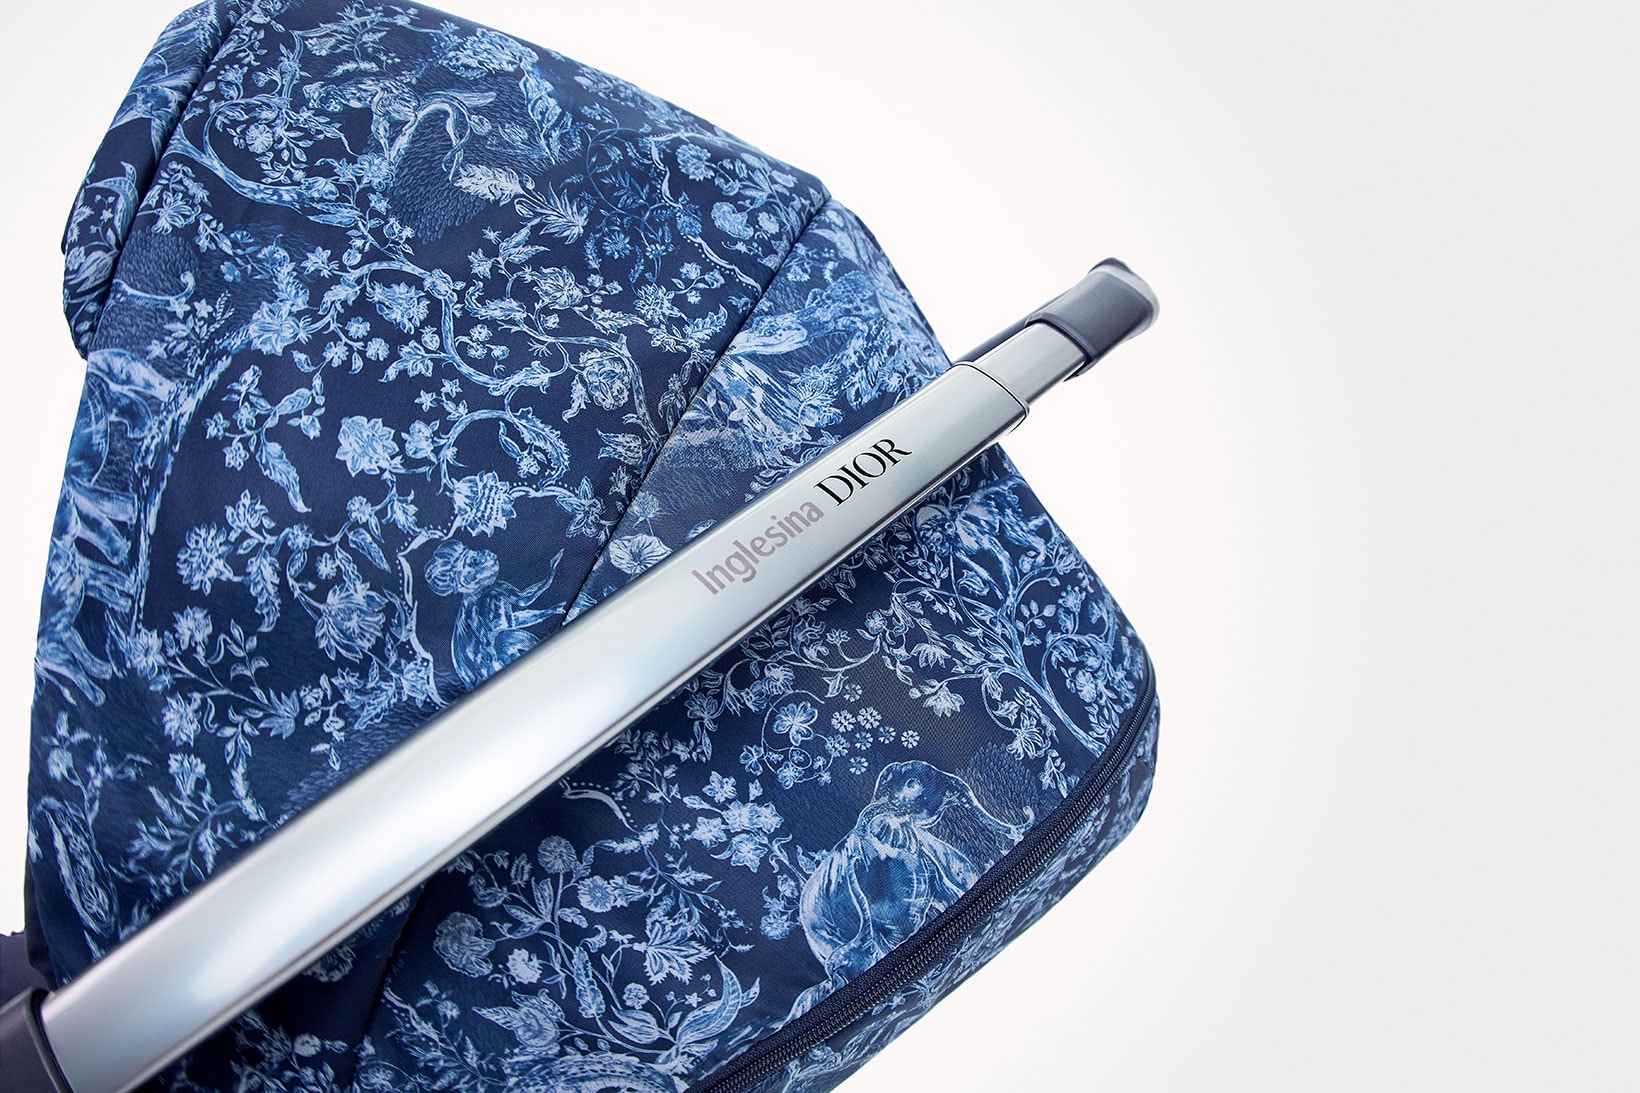 Dior Introduces First-Ever Oblique Stroller